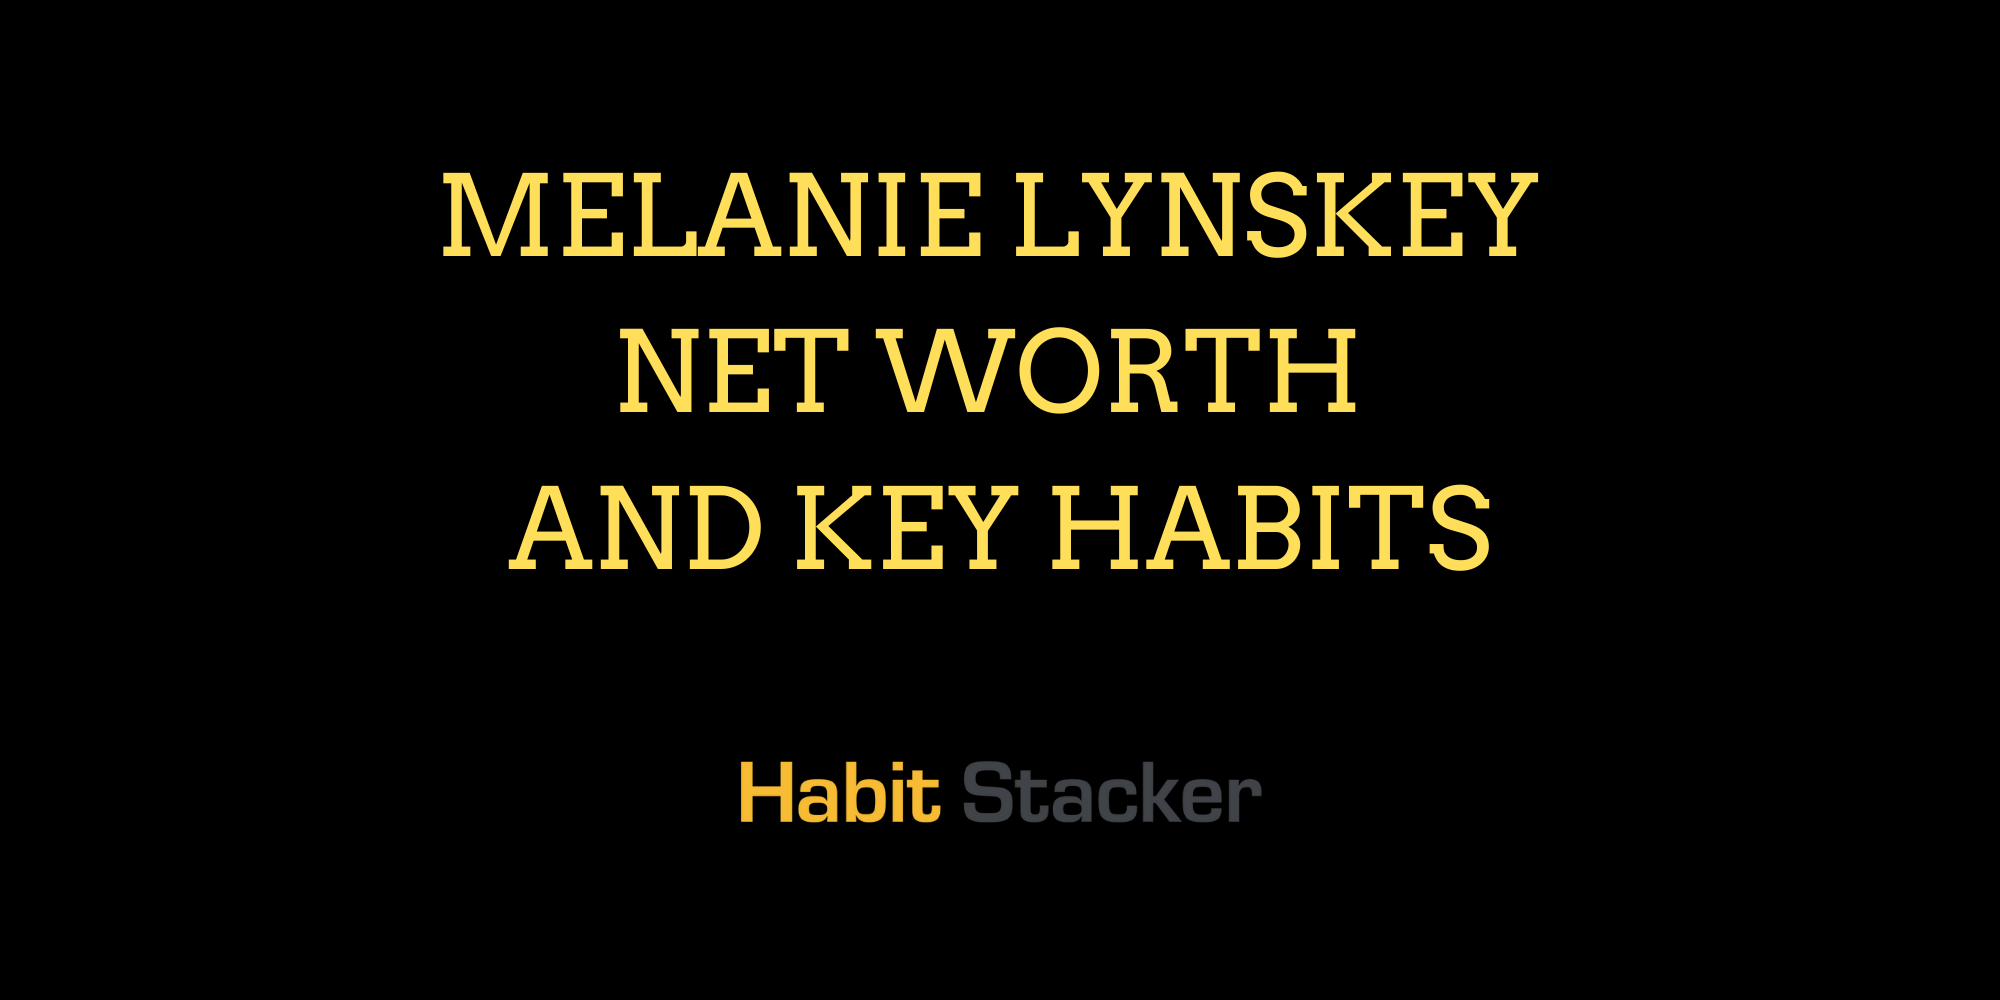 Melanie Lynskey Net Worth and Key Habits